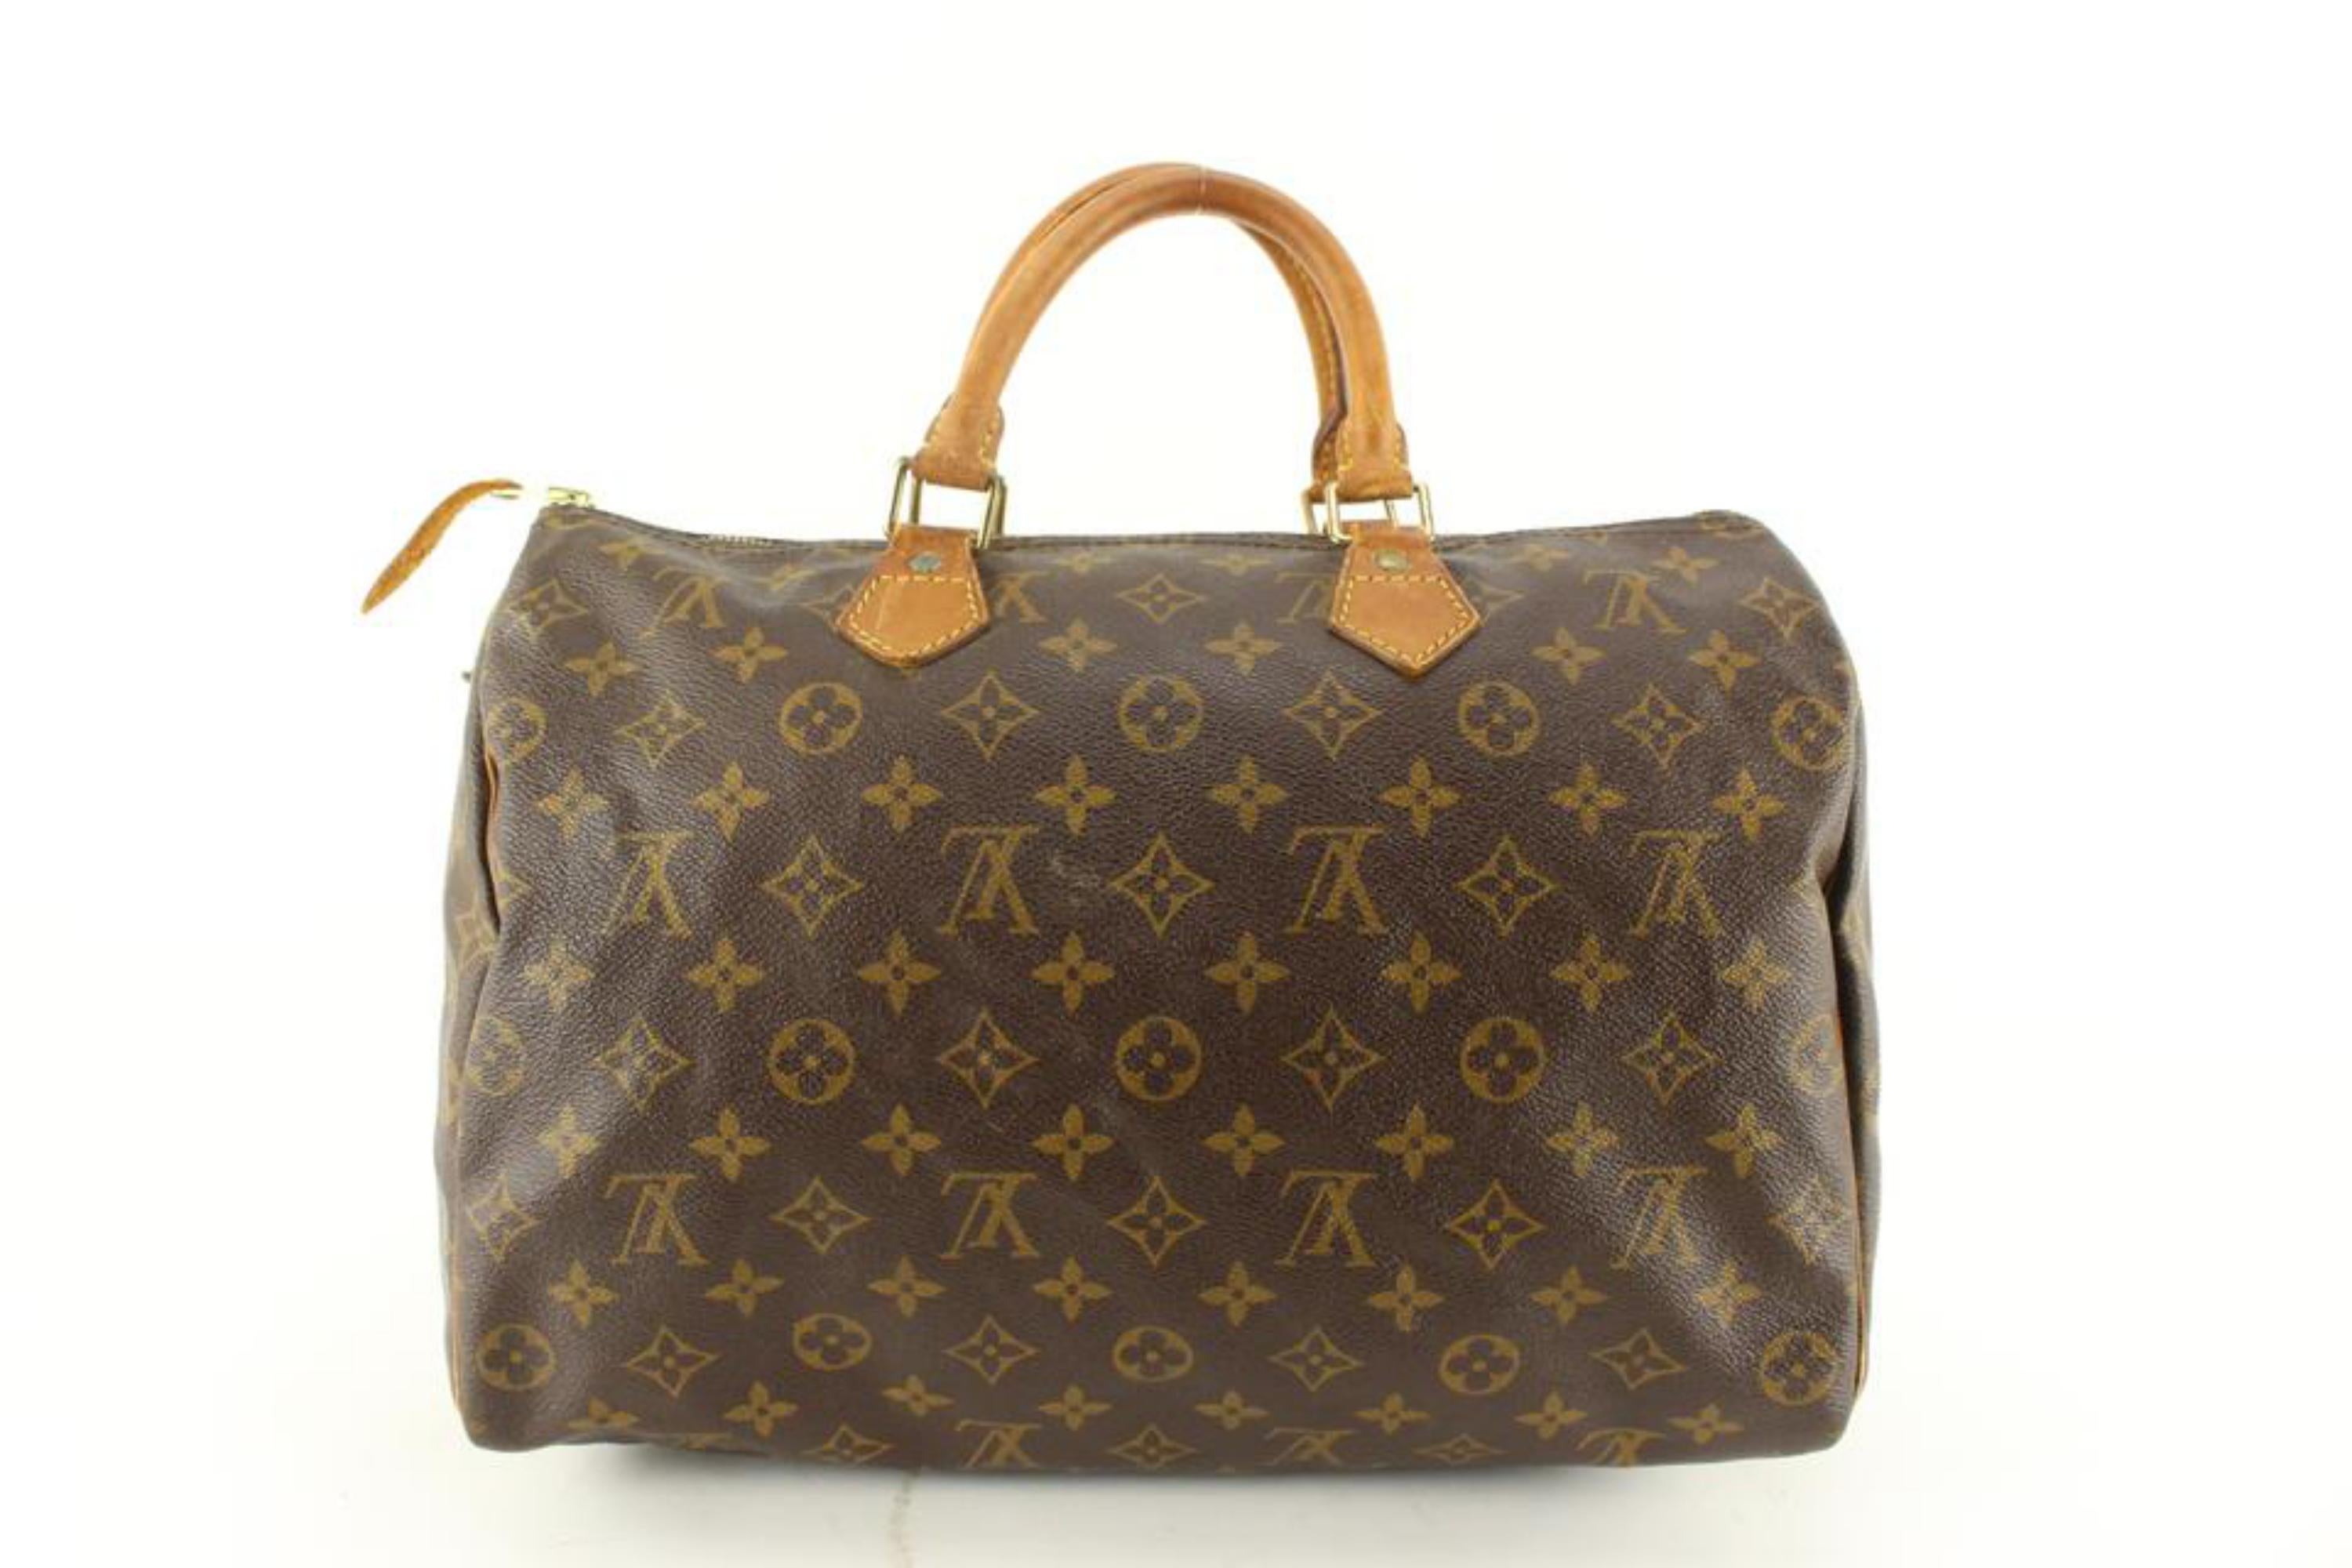 Louis Vuitton Monogram Speedy 35 Boston Bag 13lz712s 4